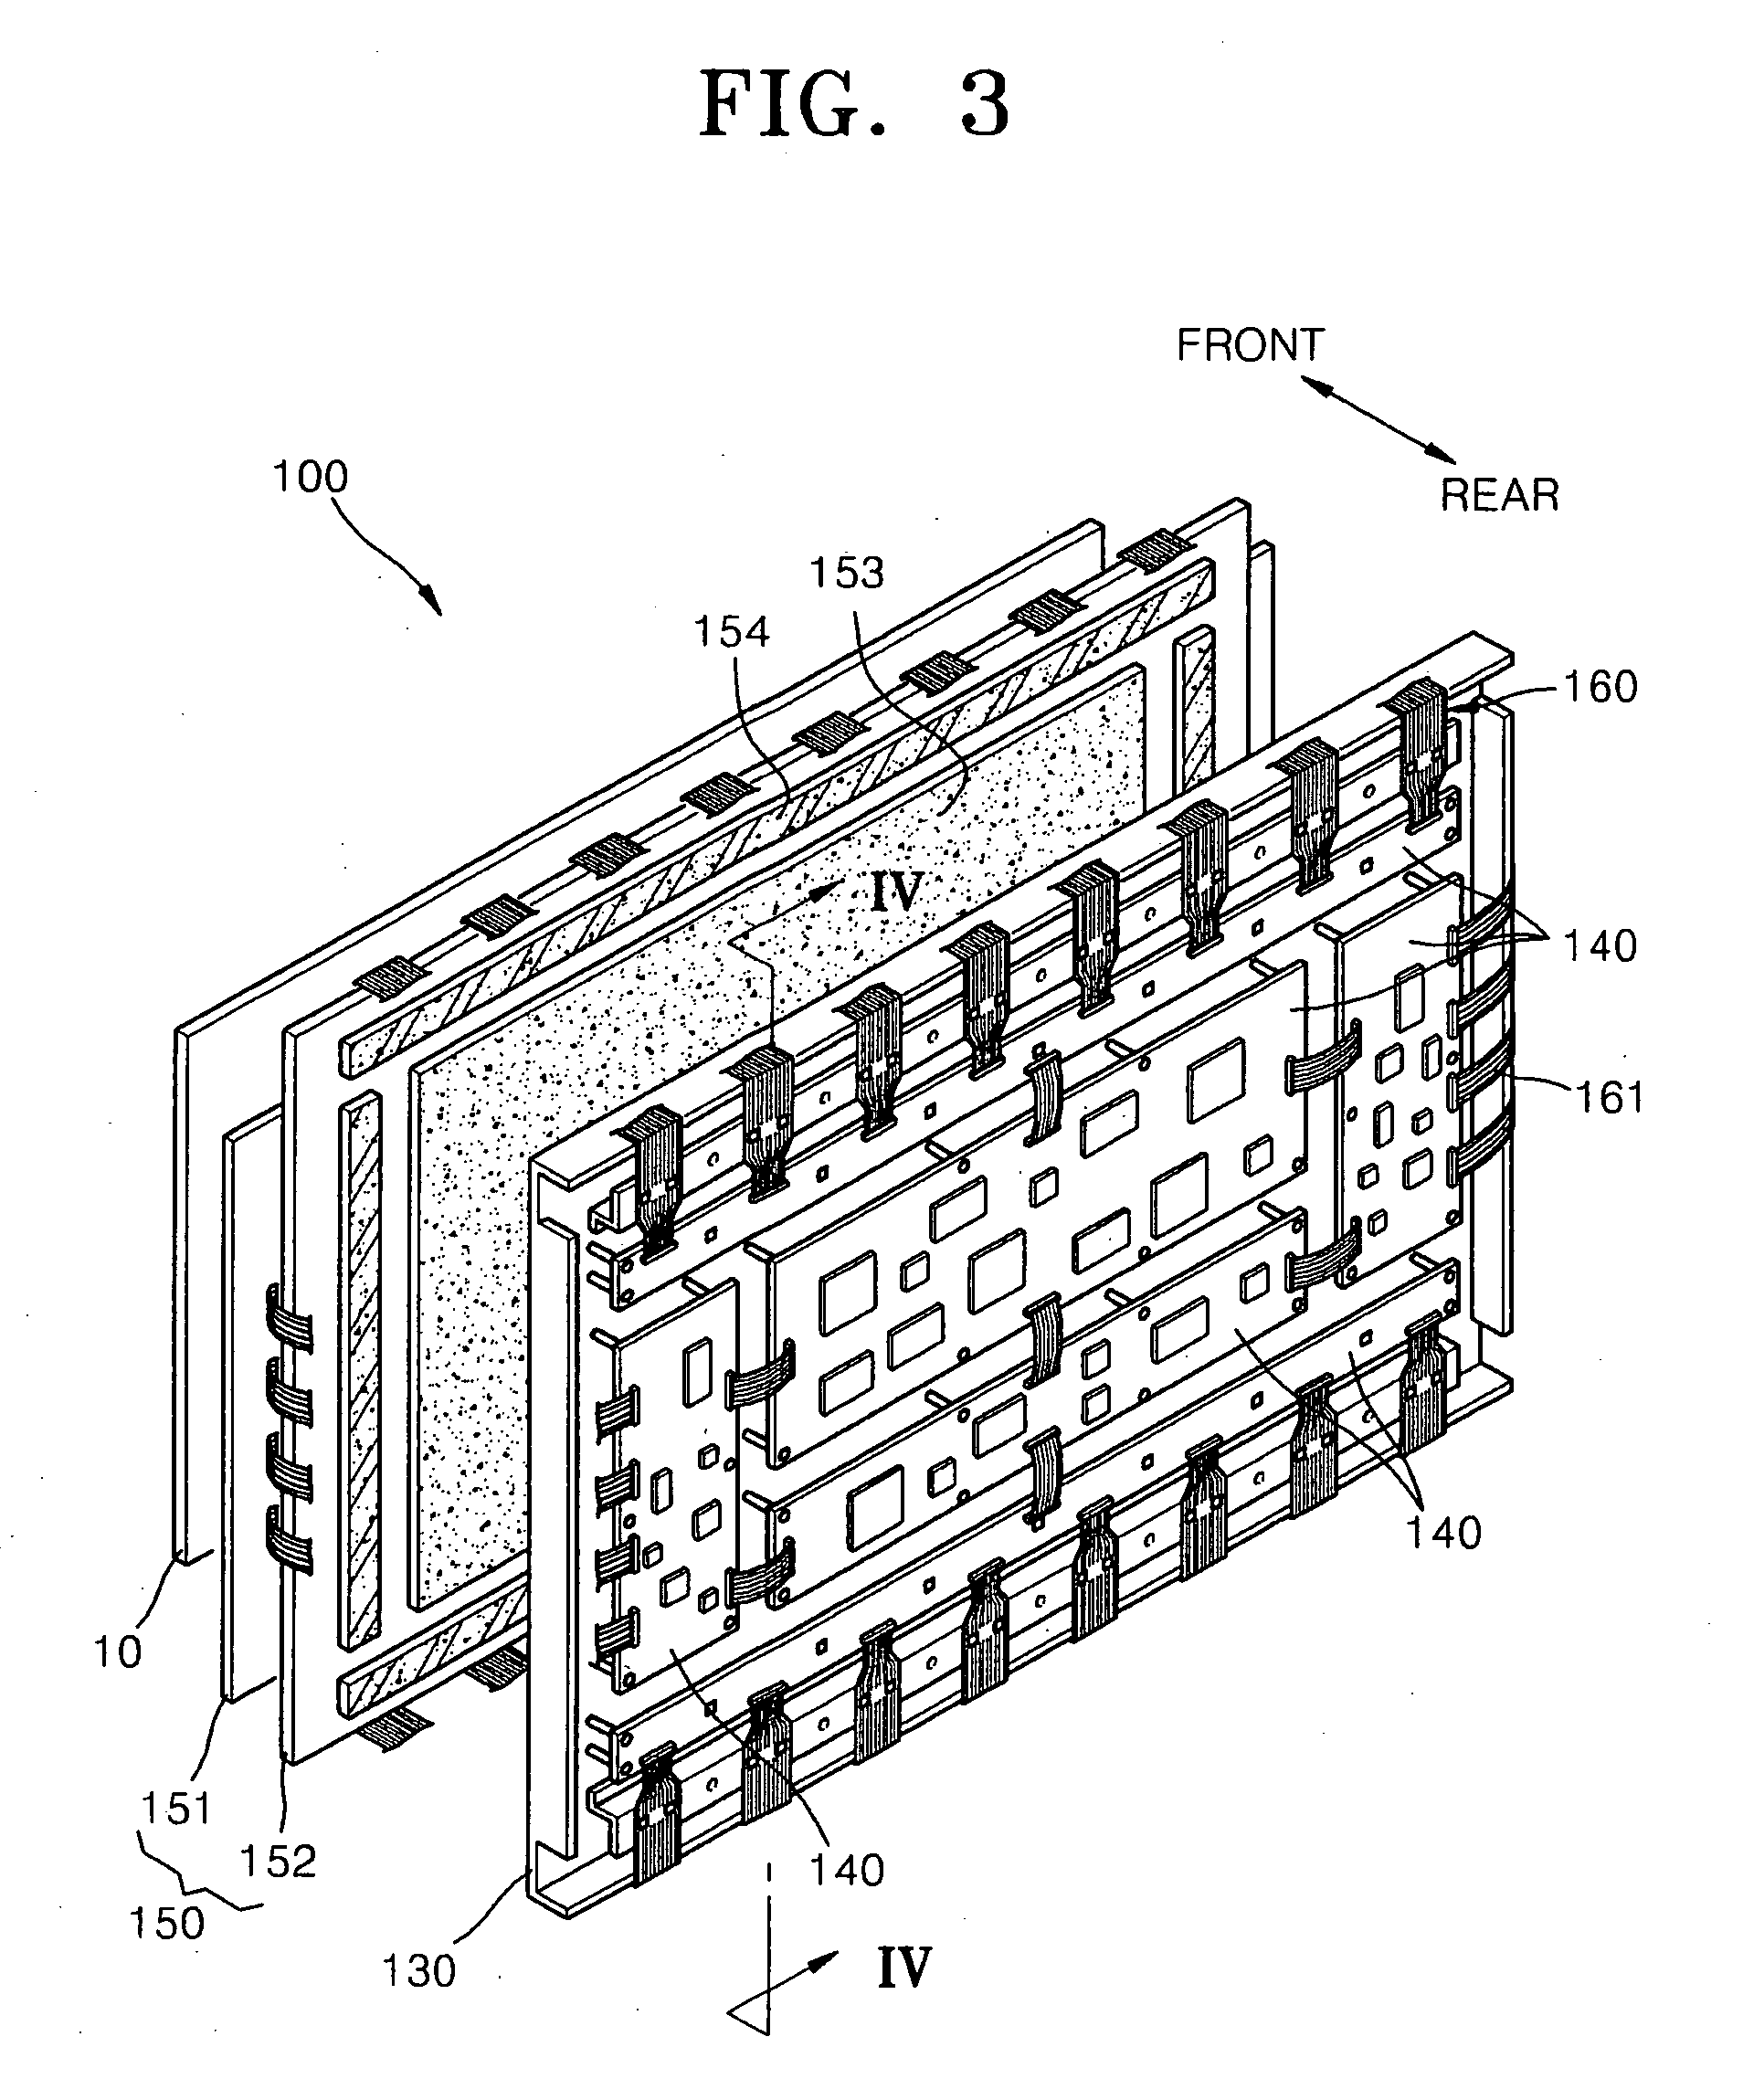 Filter for a plasma display apparatus